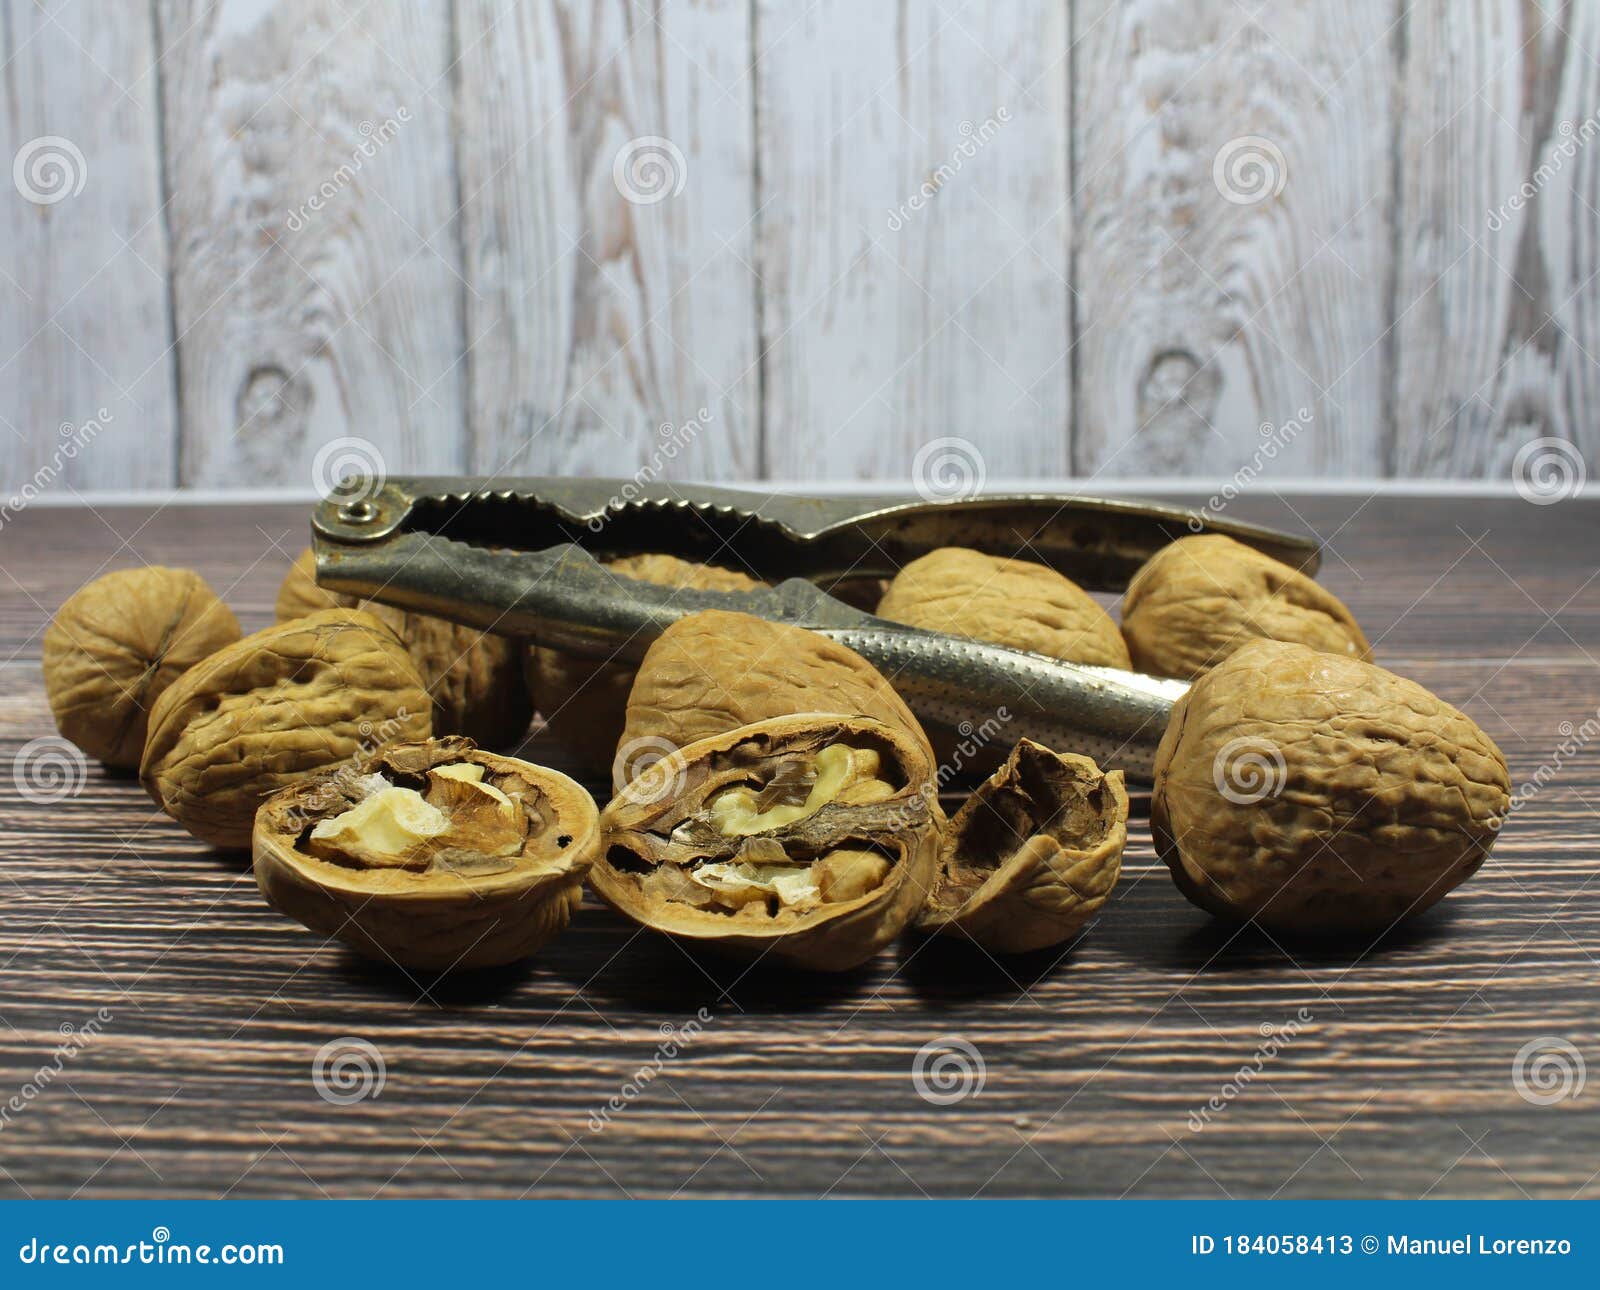 nut fruit dried fiber natural fiber walnut shell health good seed